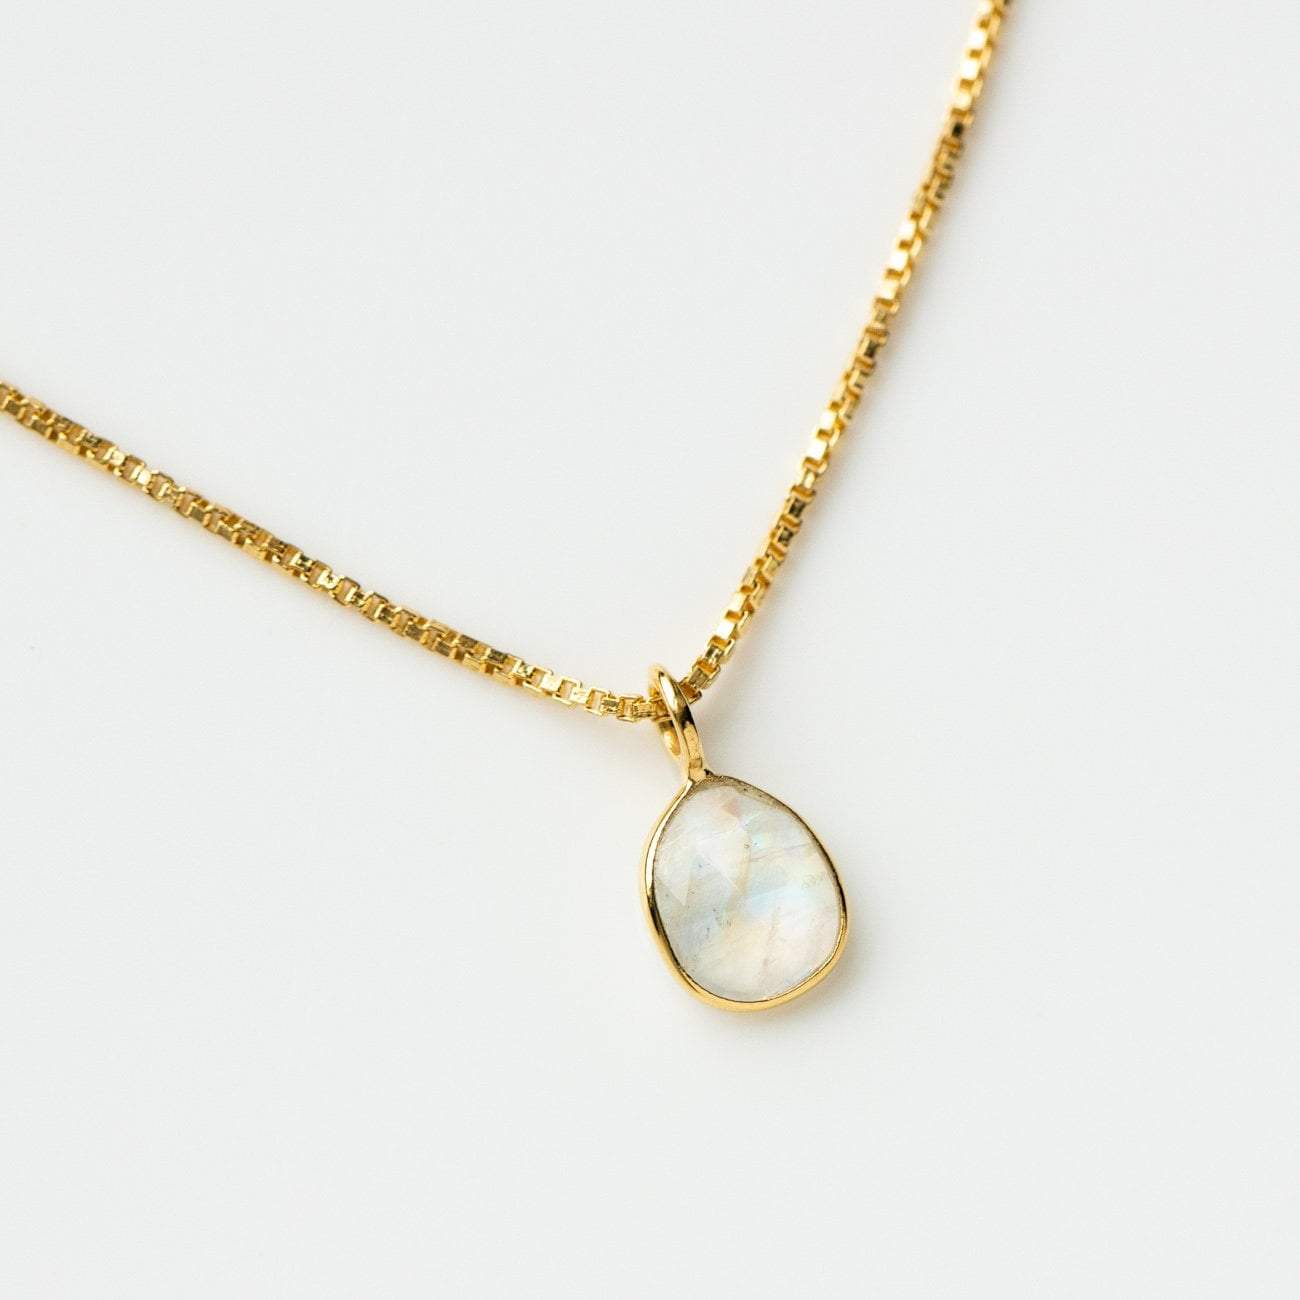 sofia slice necklace with moonstone pendant